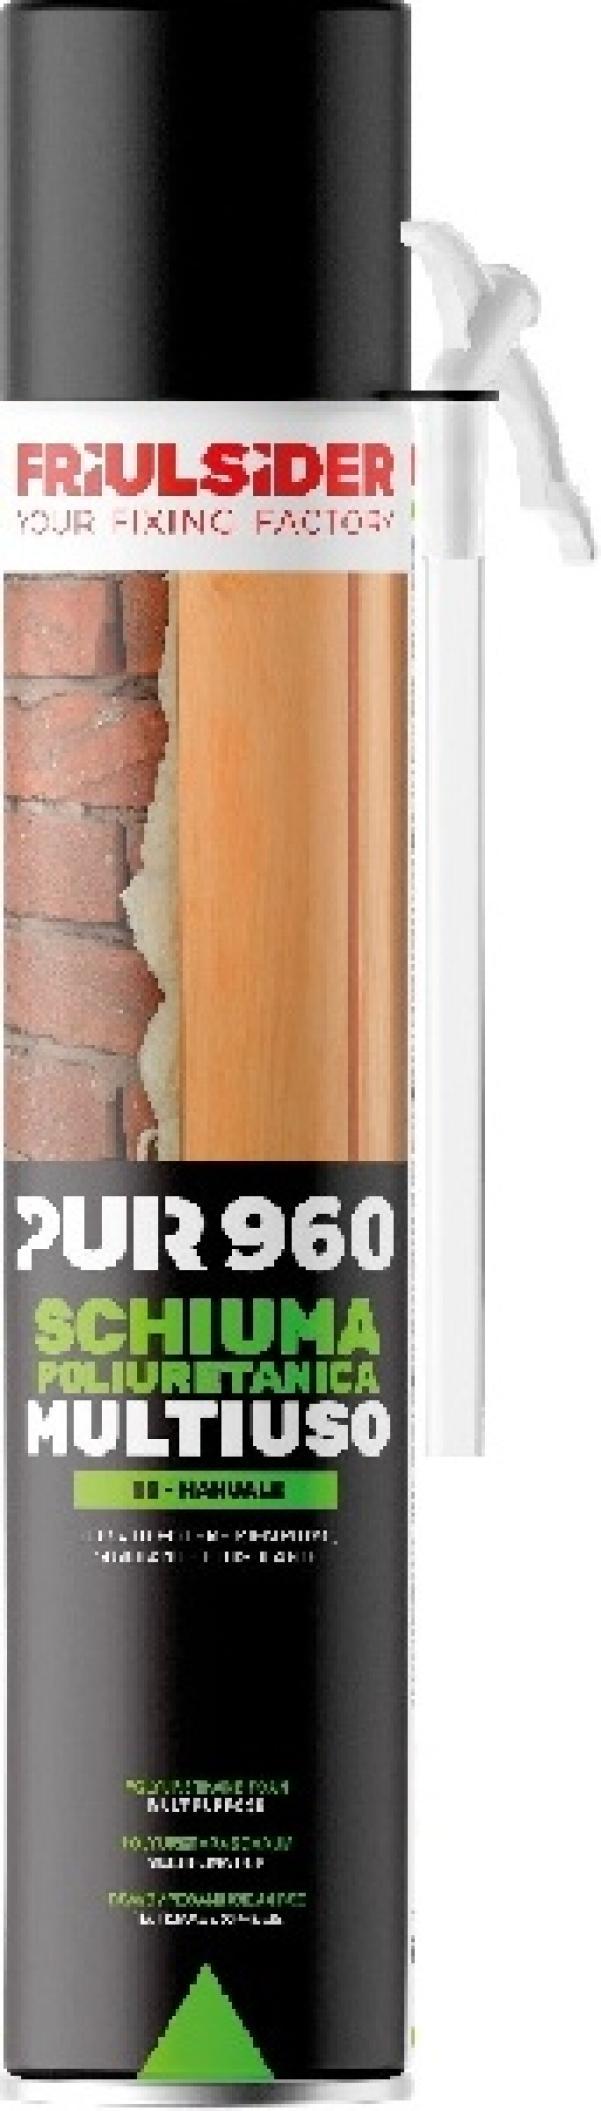 PUR 960 Schiuma poliuretanica B3 manuale Friulsider 9600000000000